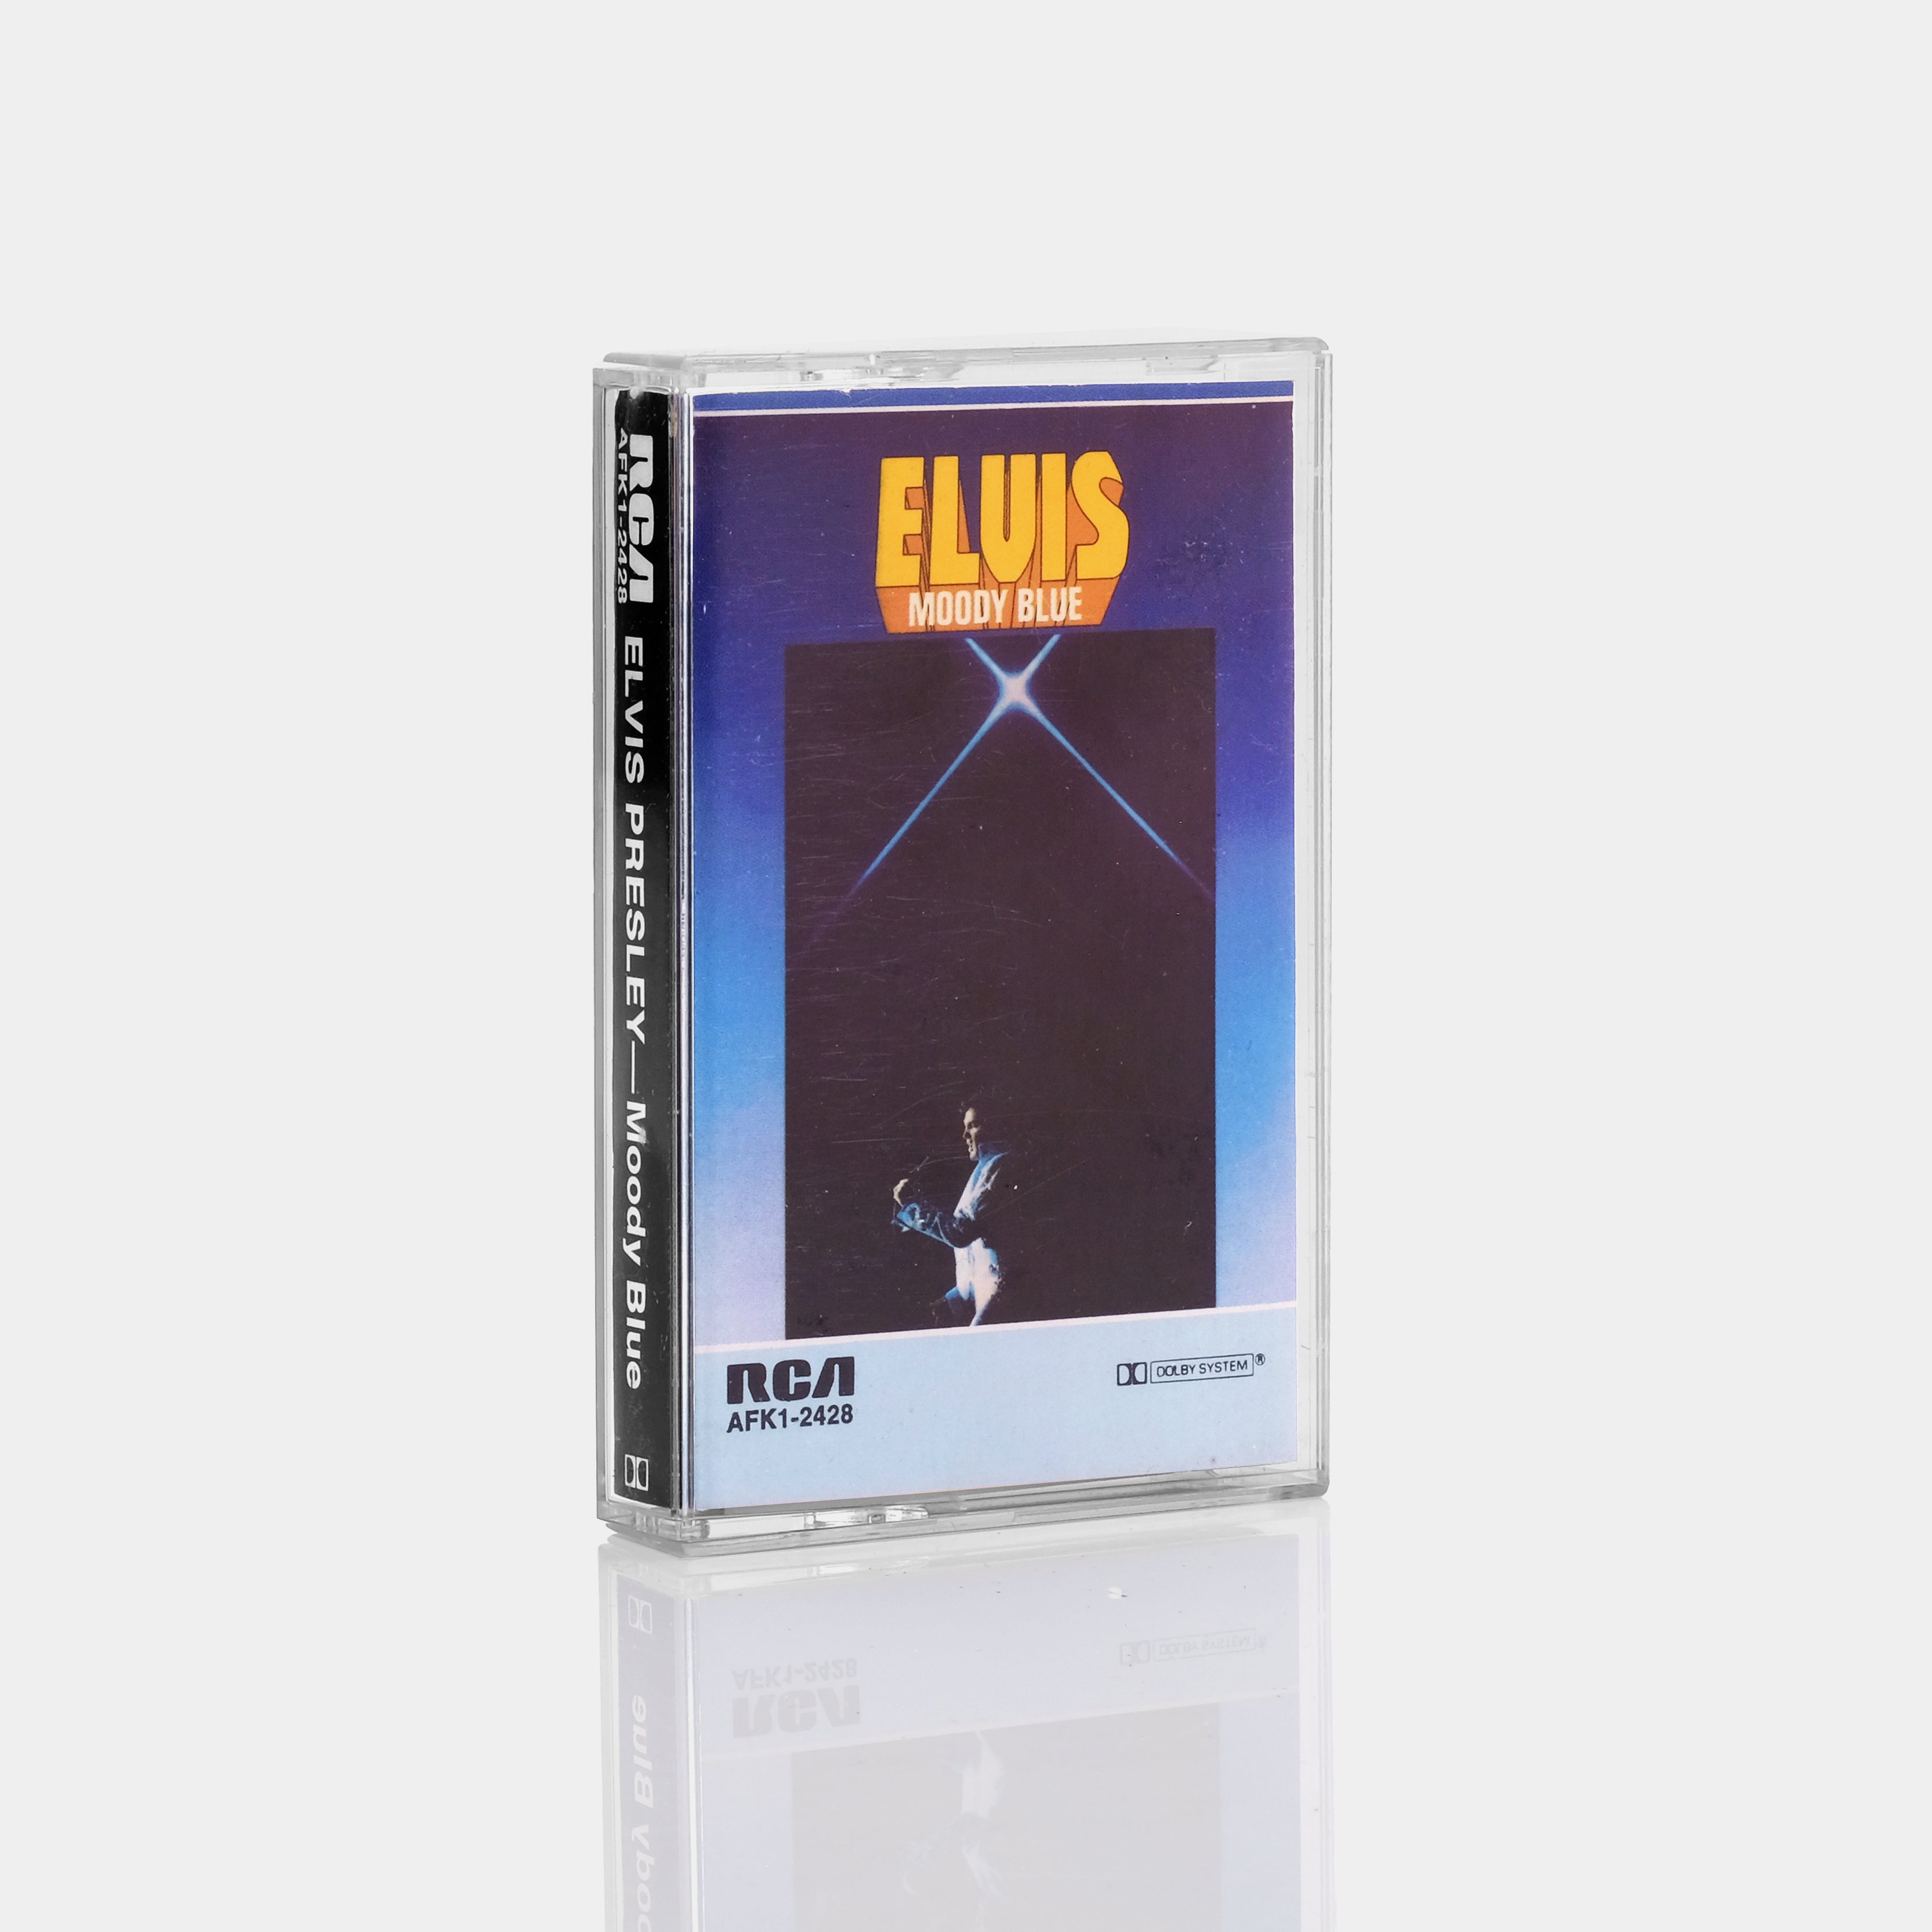 Elvis Presley - Moody Blue Cassette Tape